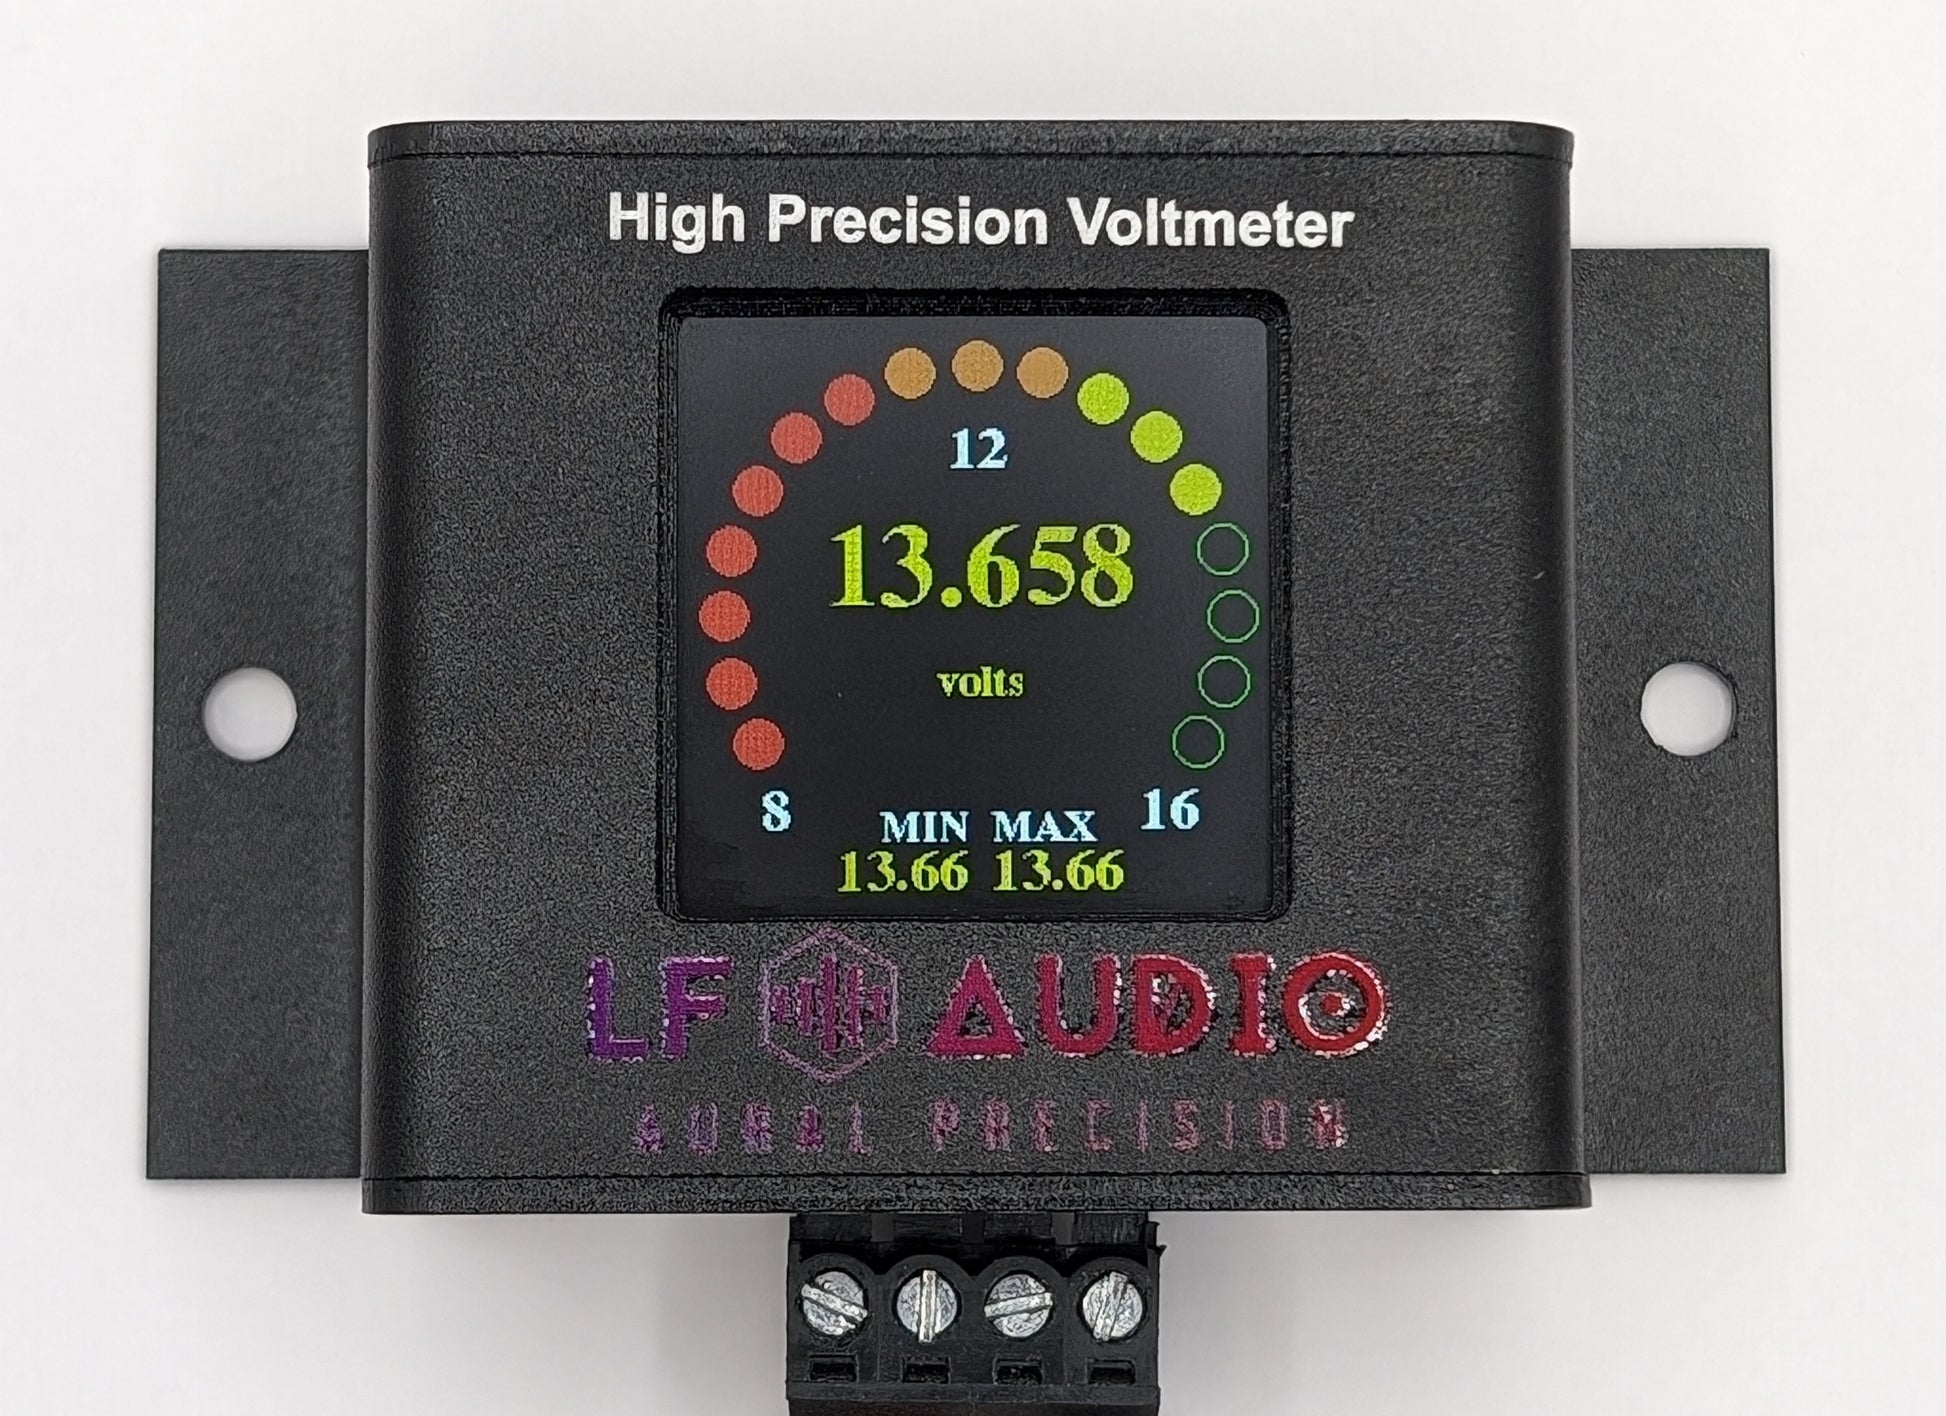 High Precision Voltmeter (HPVM)